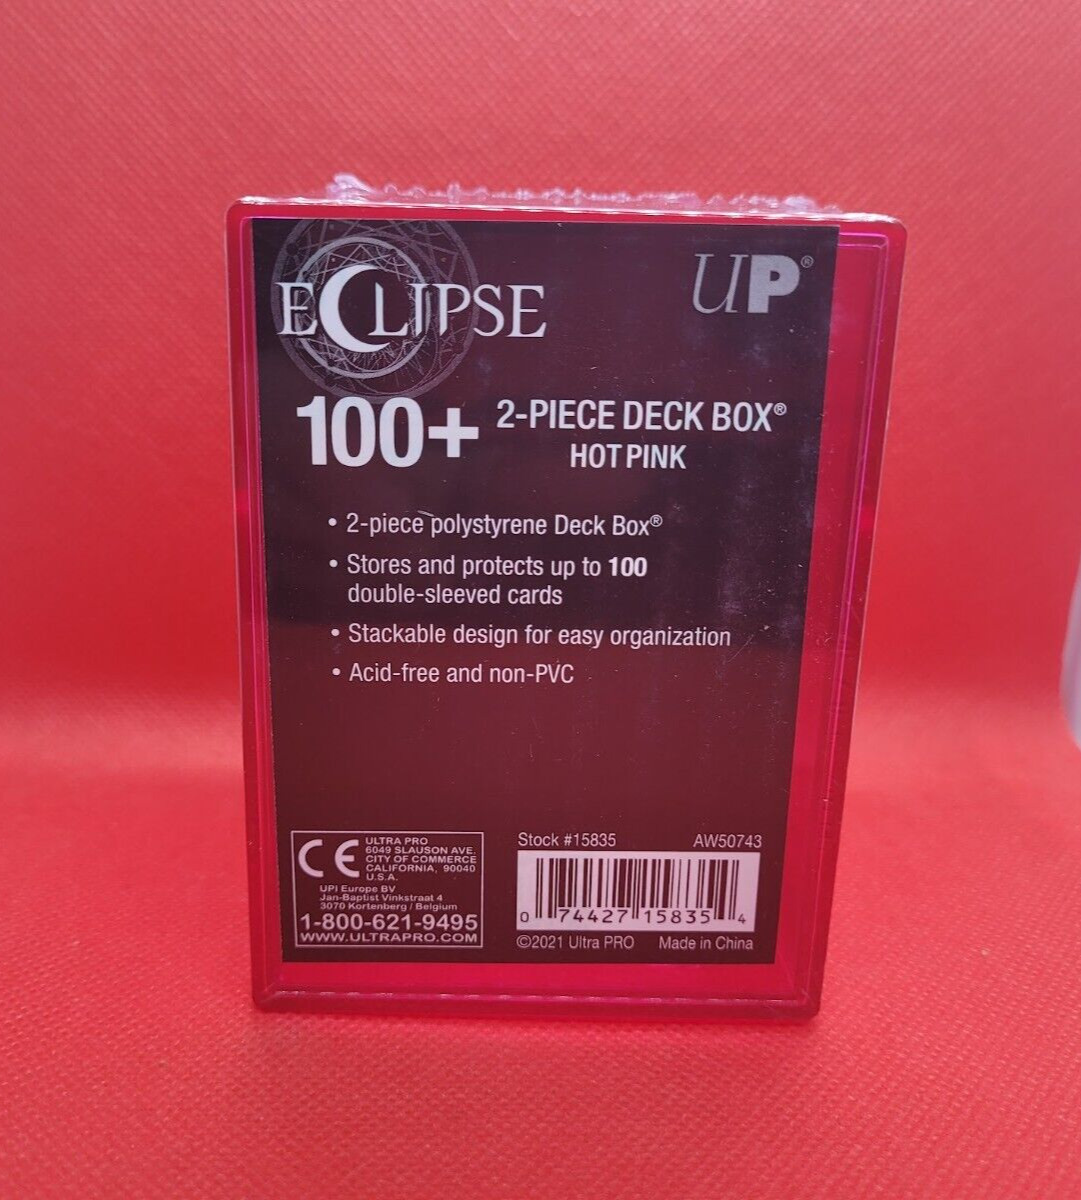 Ultra Pro Eclipse 100+ Card 2-piece Deck Box Hot Pink. New B3g1 Free!